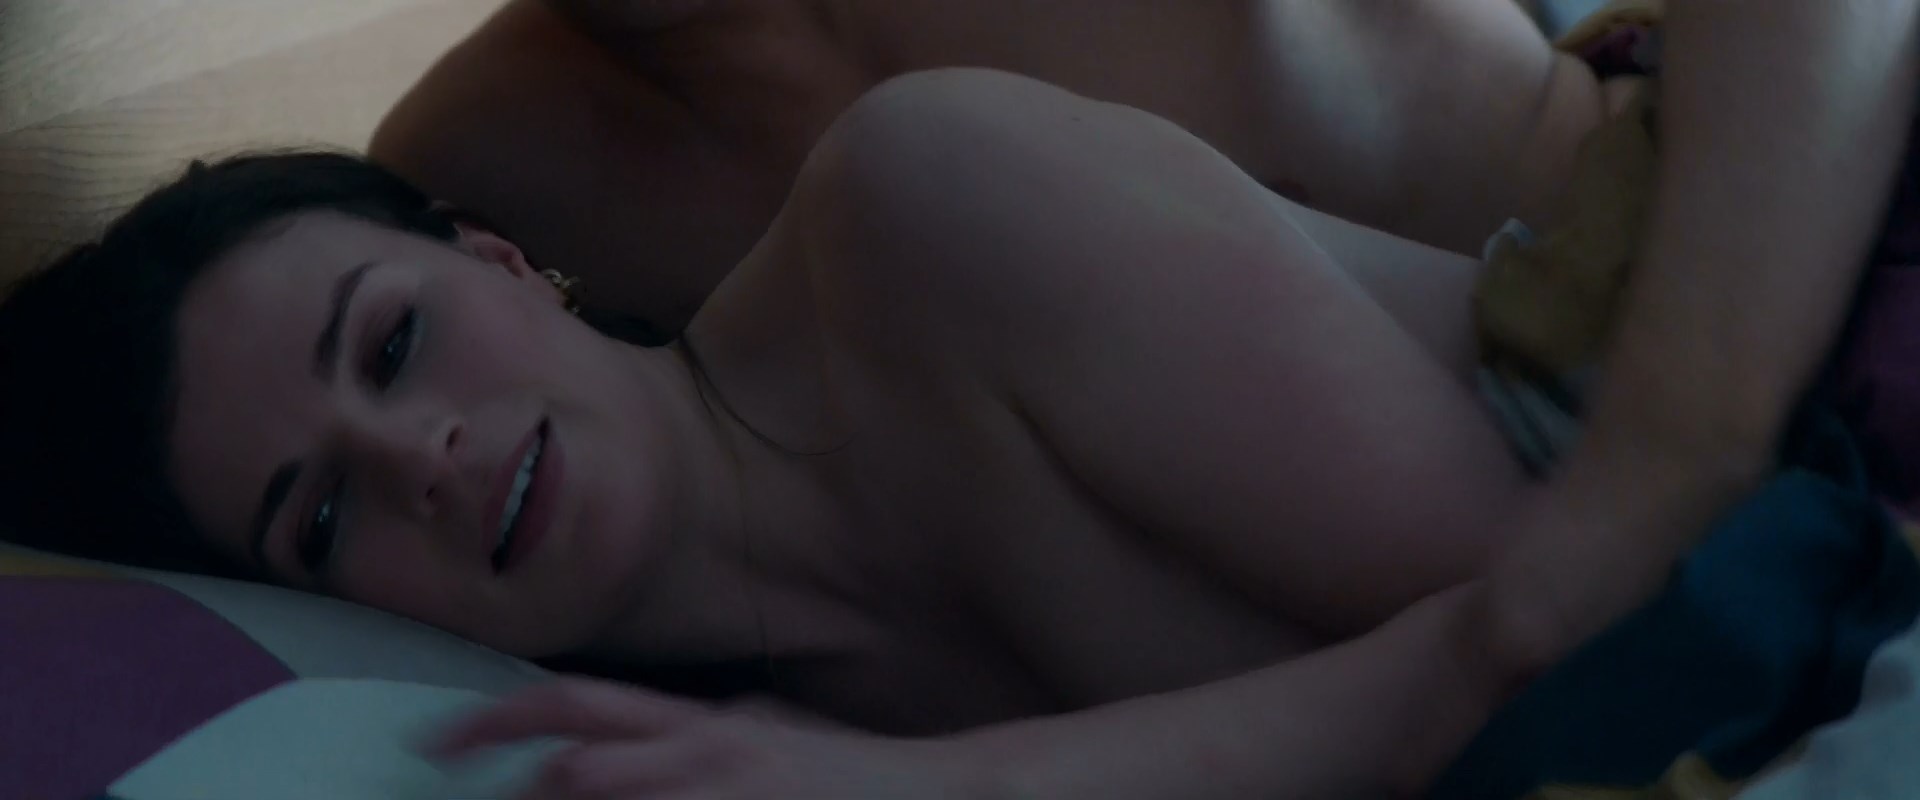 Nude video celebs " Actress " Aisling Bea